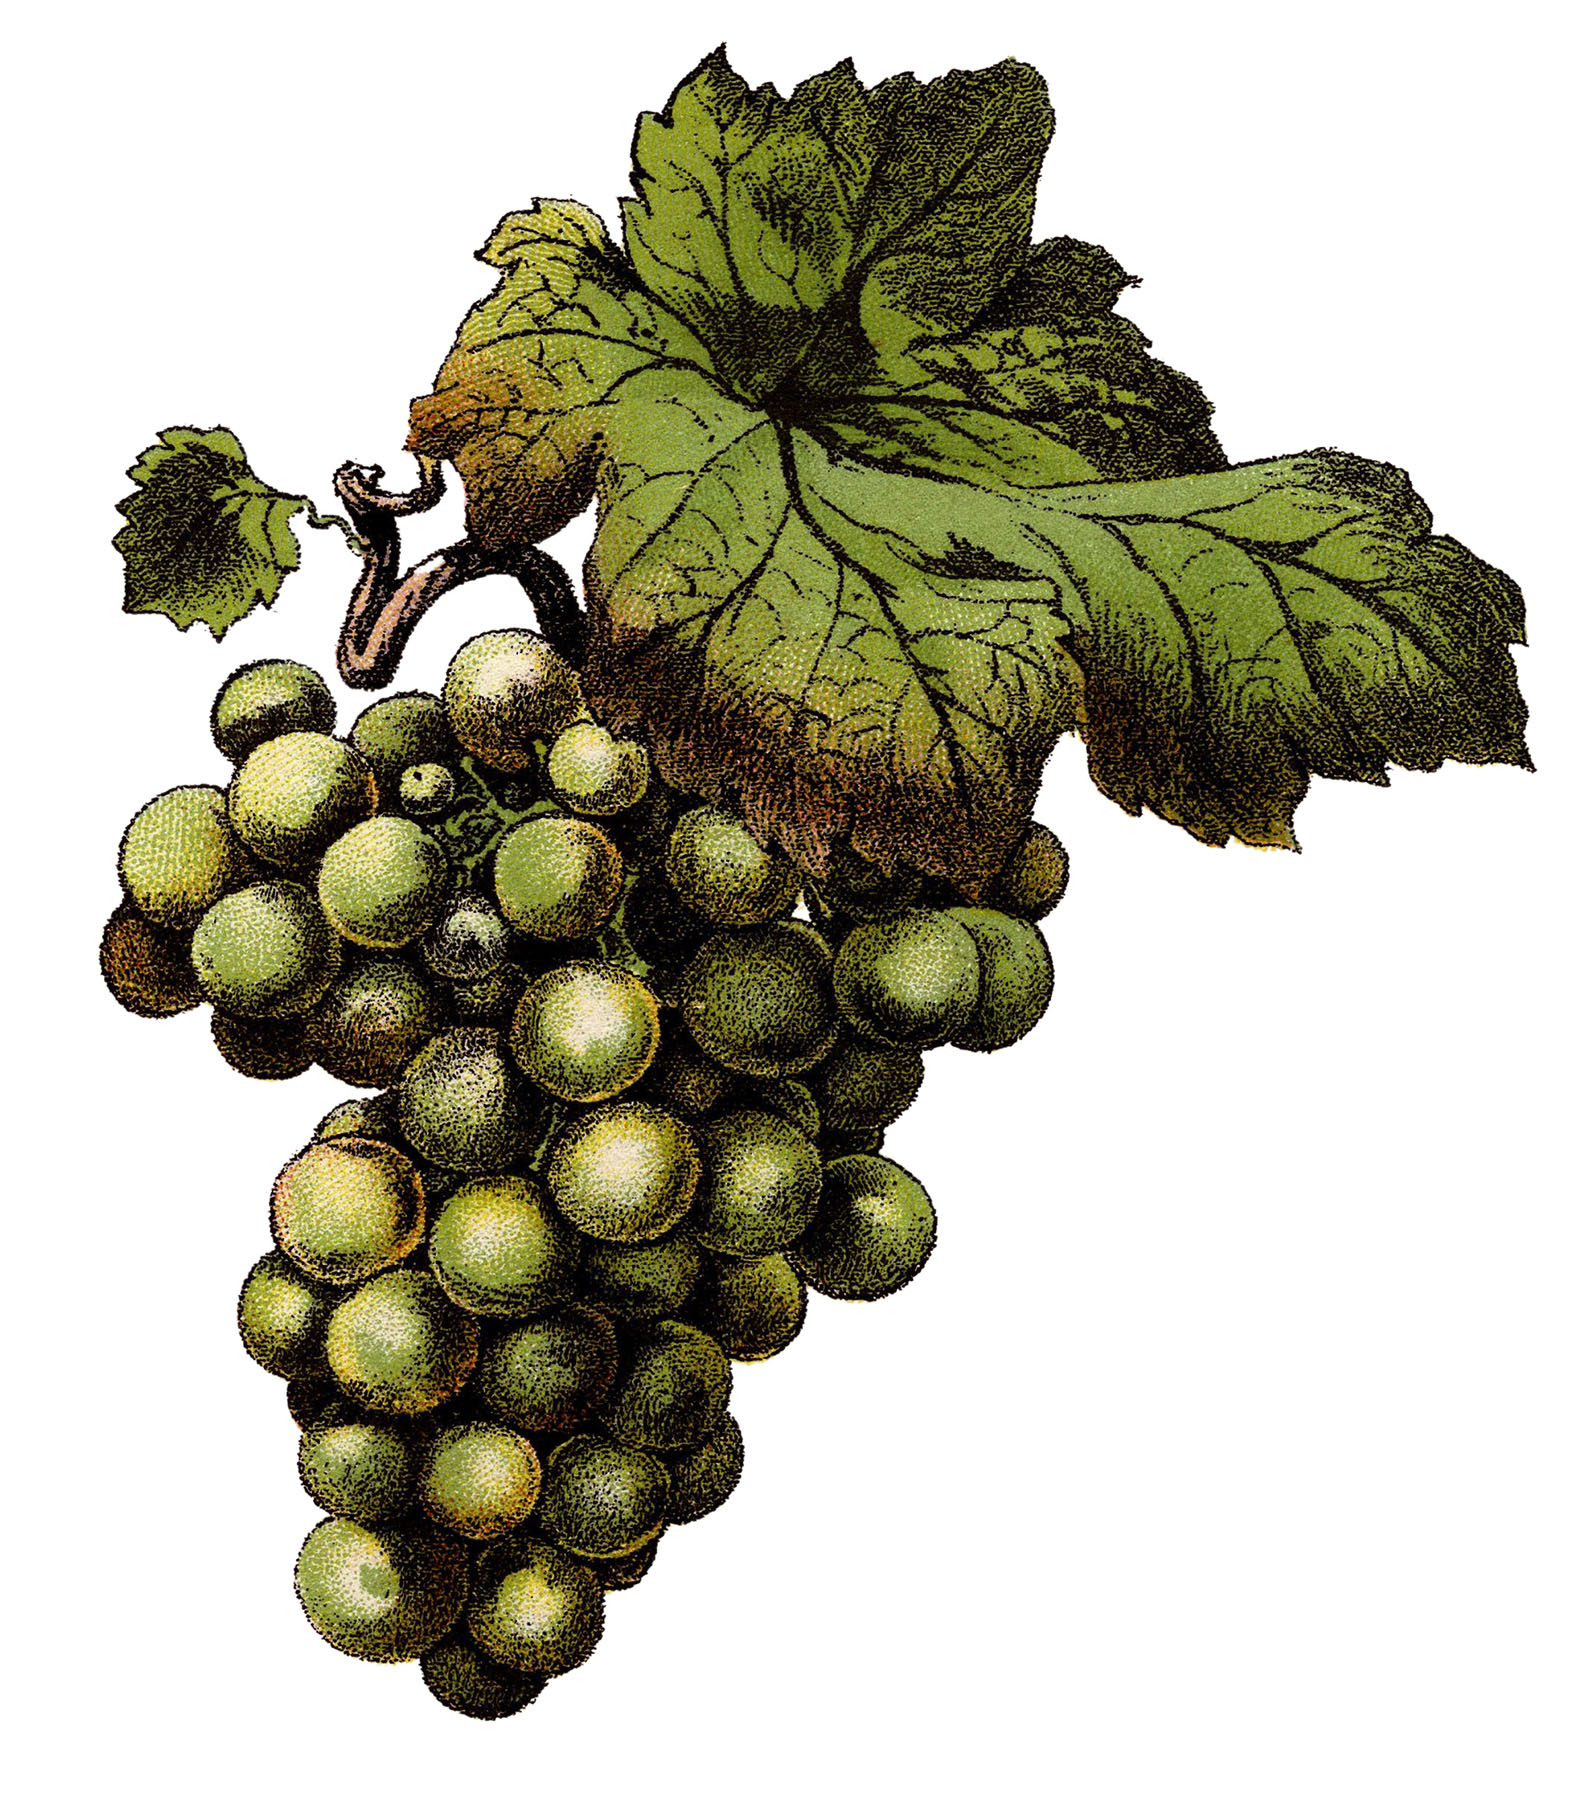 Green Grapes Clipart